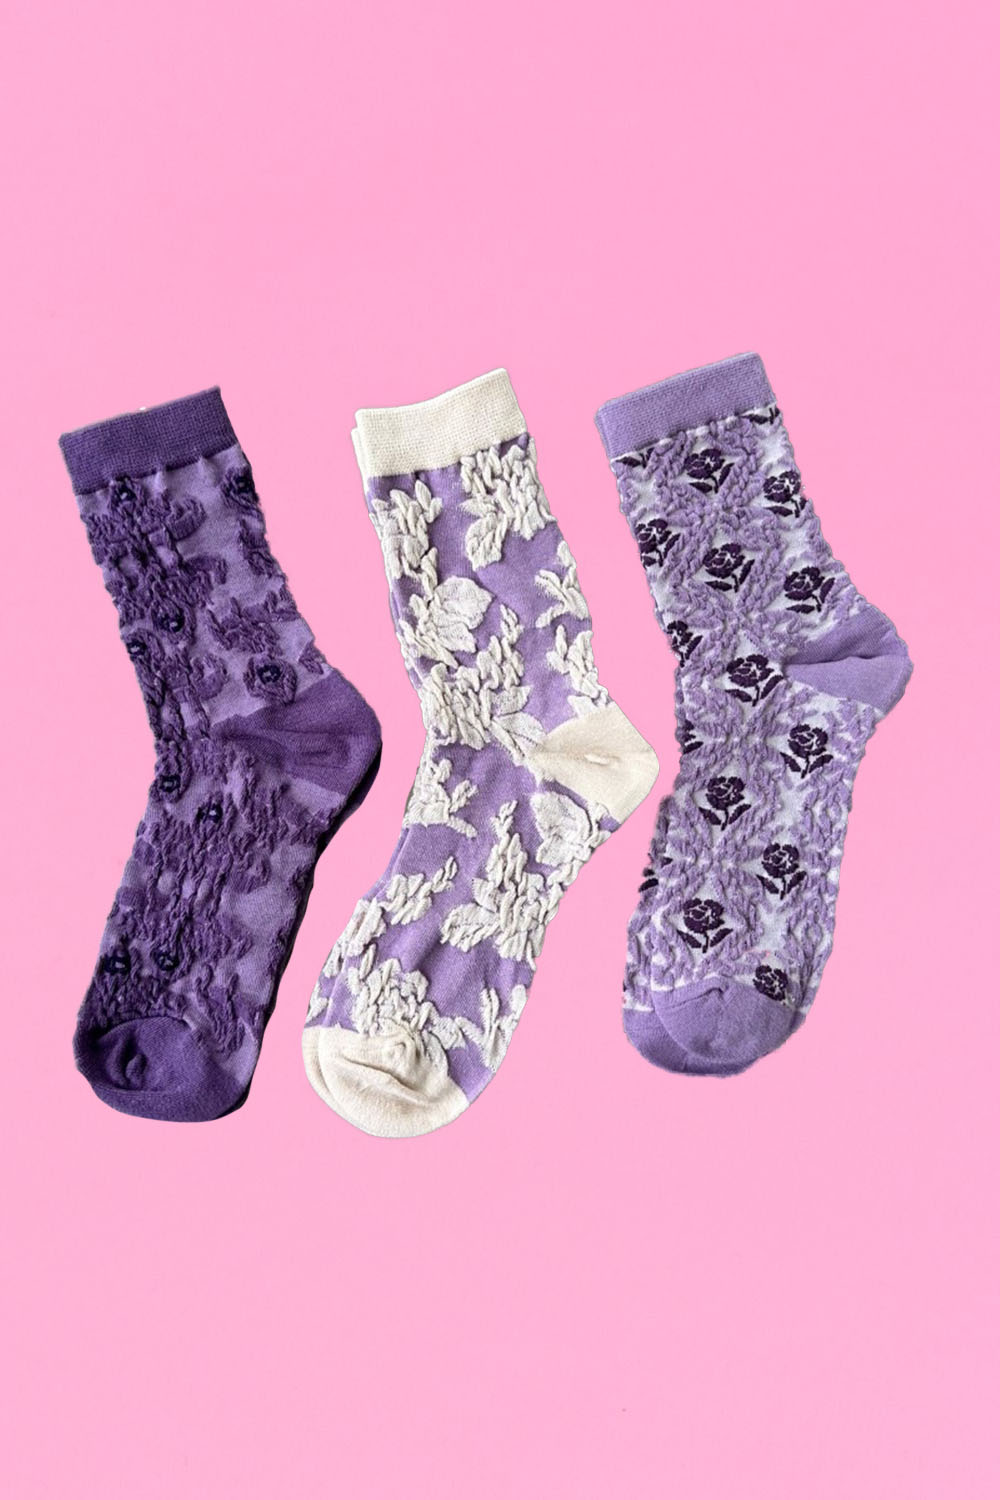 The Annah Stretton Candy Crew socks in purple